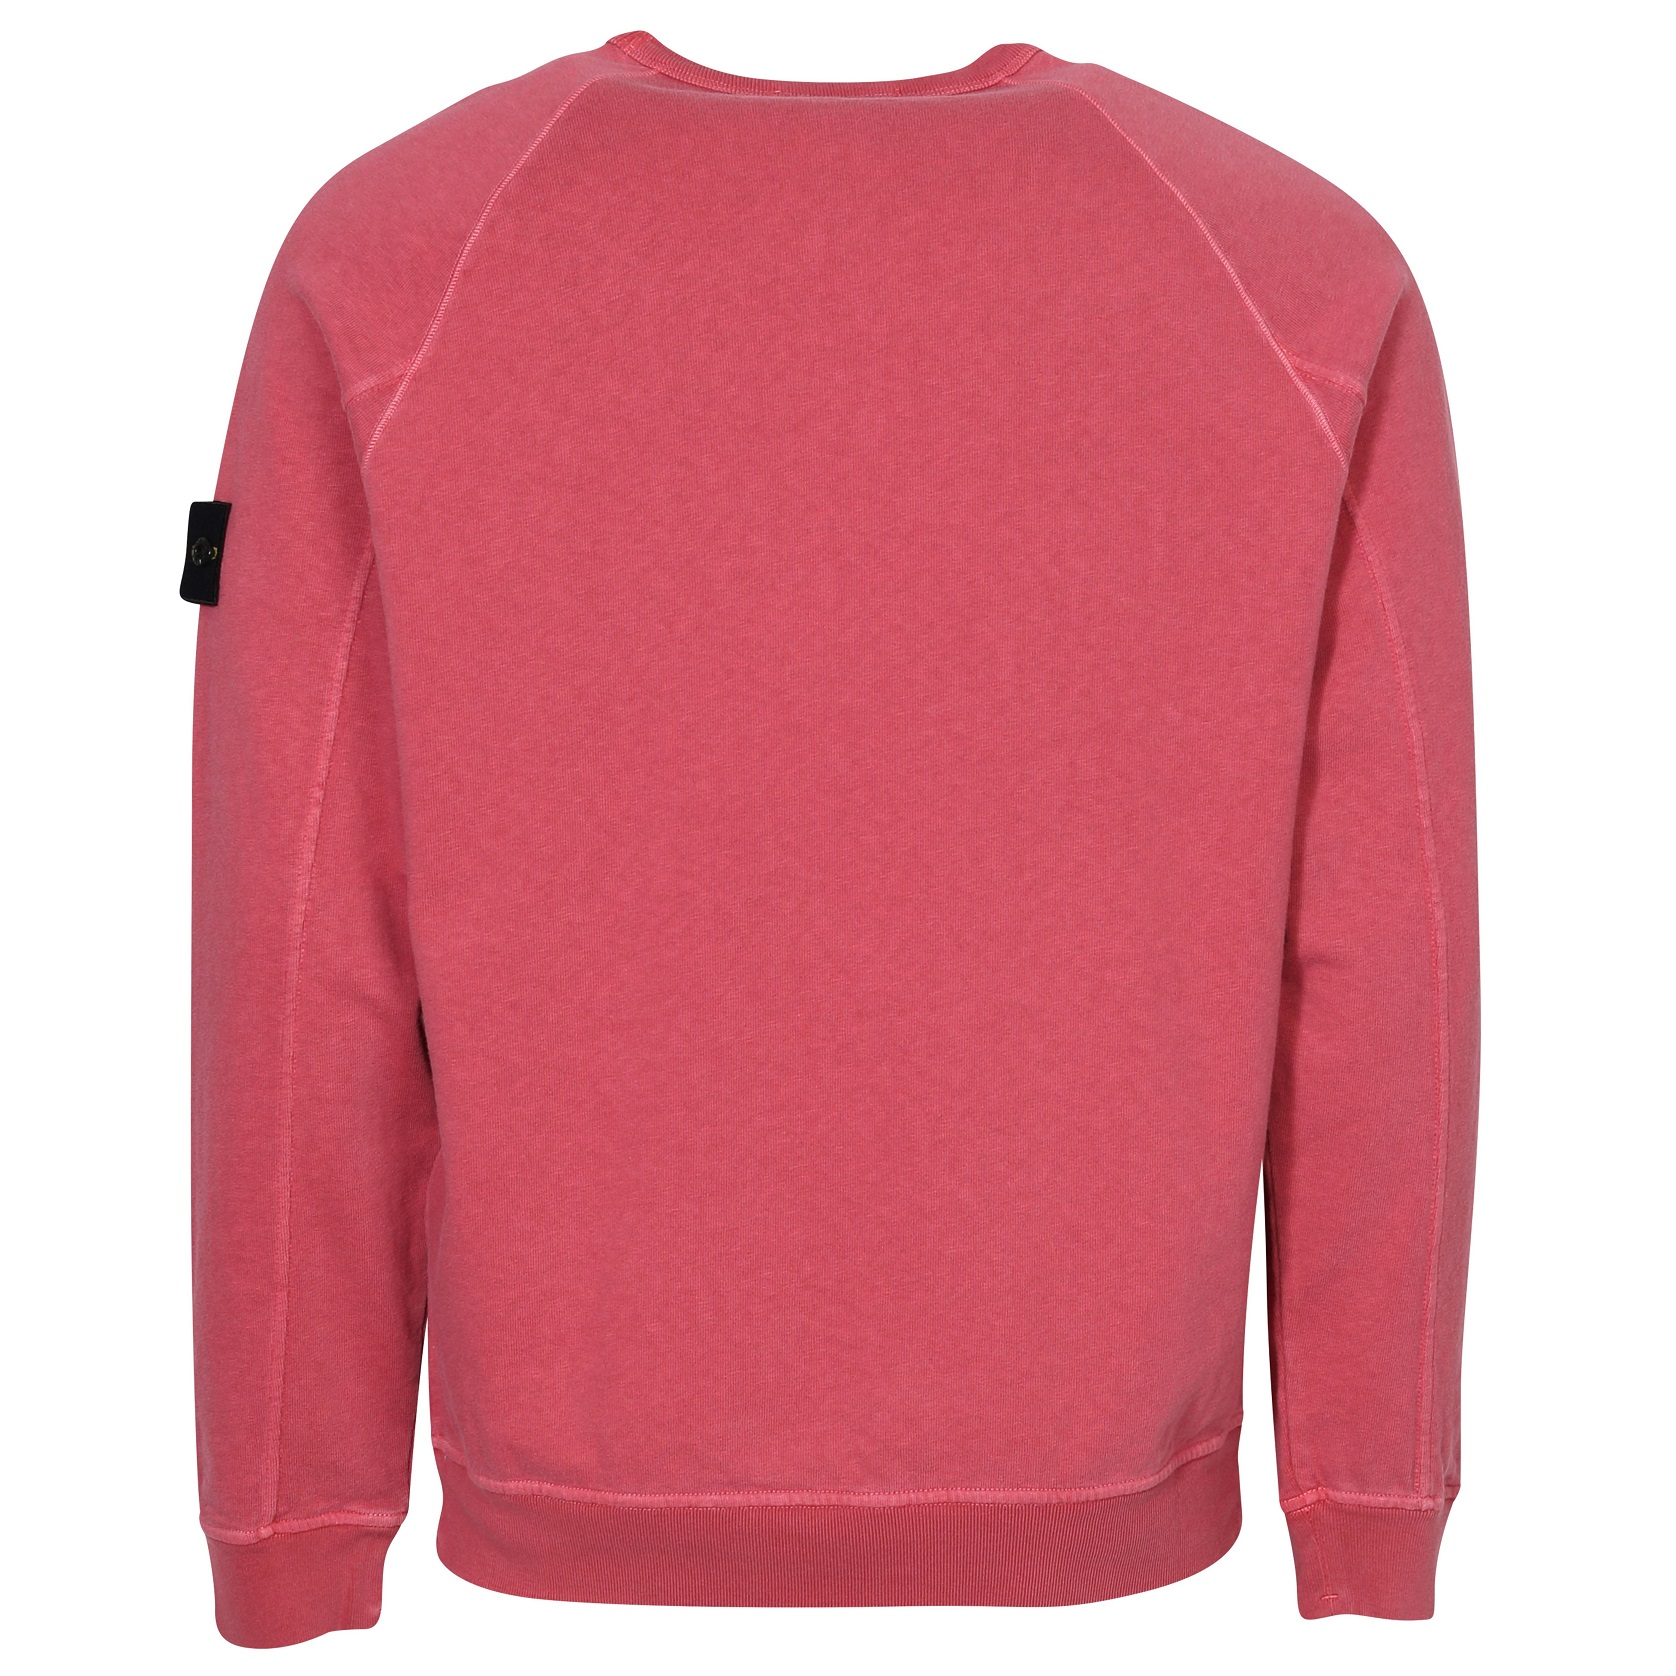 STONE ISLAND Light Sweatshirt in Washed Fuchsia XL